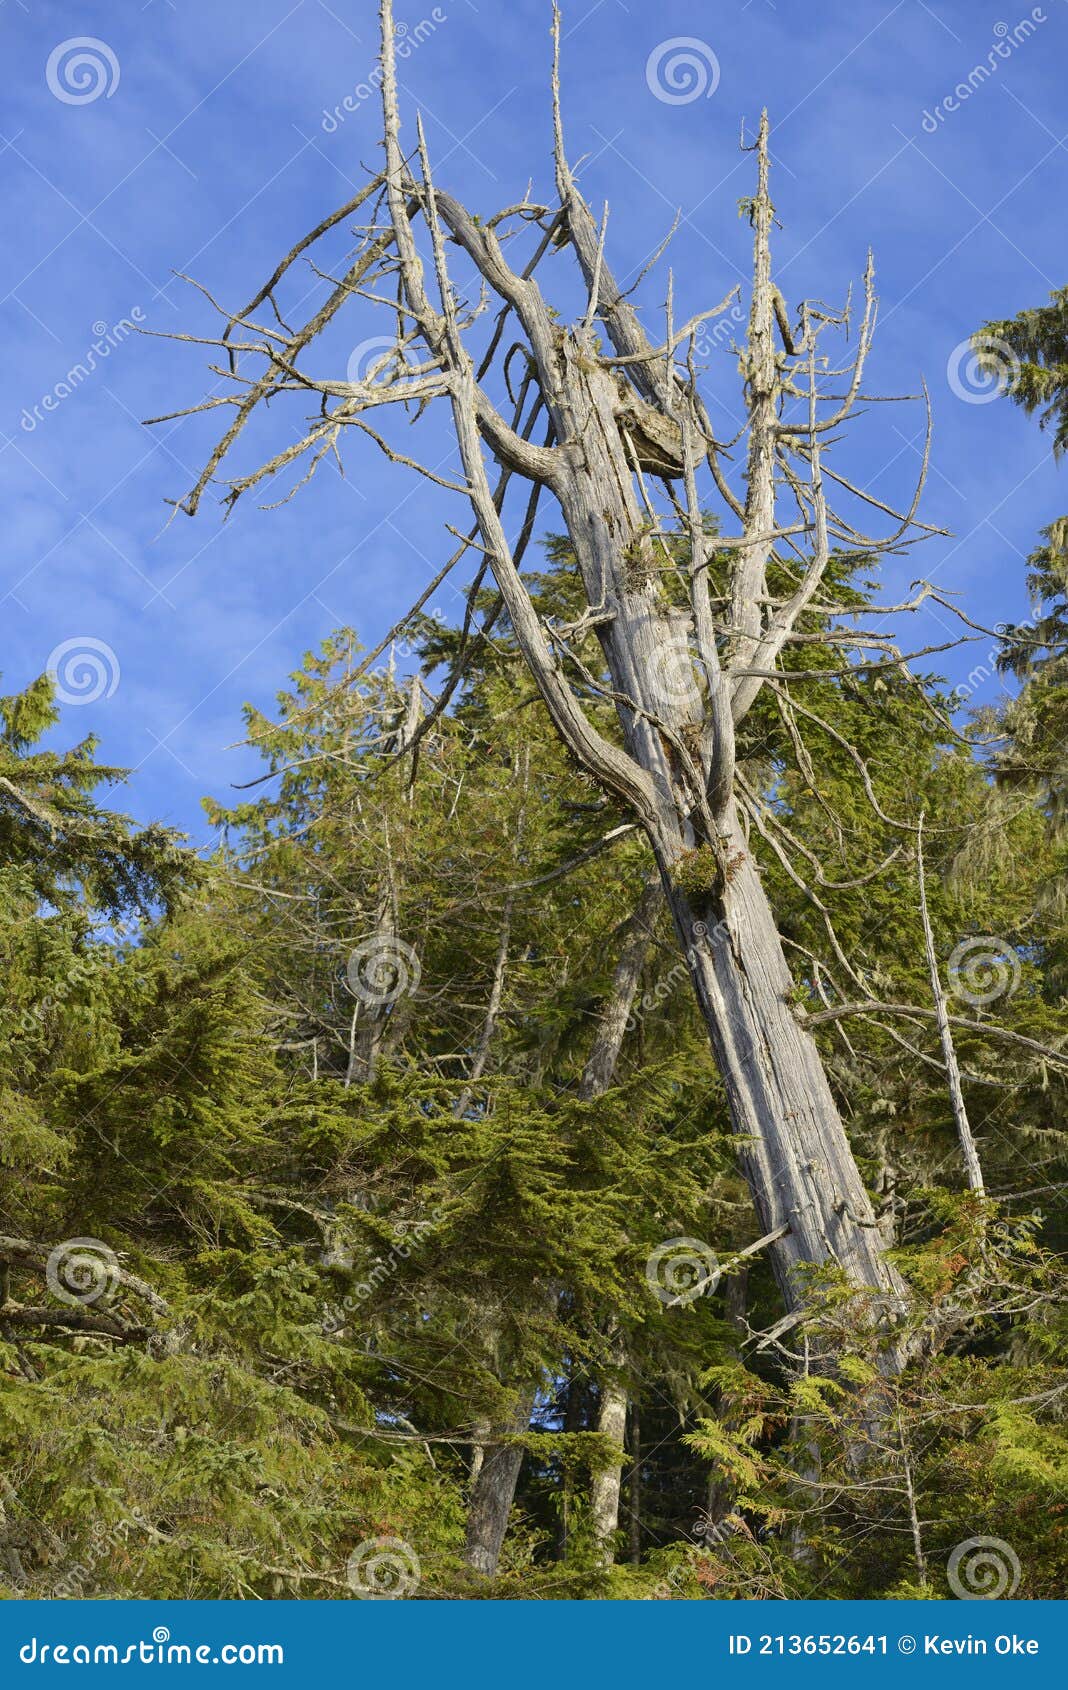 https://thumbs.dreamstime.com/z/dead-cedar-tree-snag-rainforest-tonquin-beach-british-columbia-canada-dead-cedar-tree-snag-rainforest-tonquin-beach-213652641.jpg